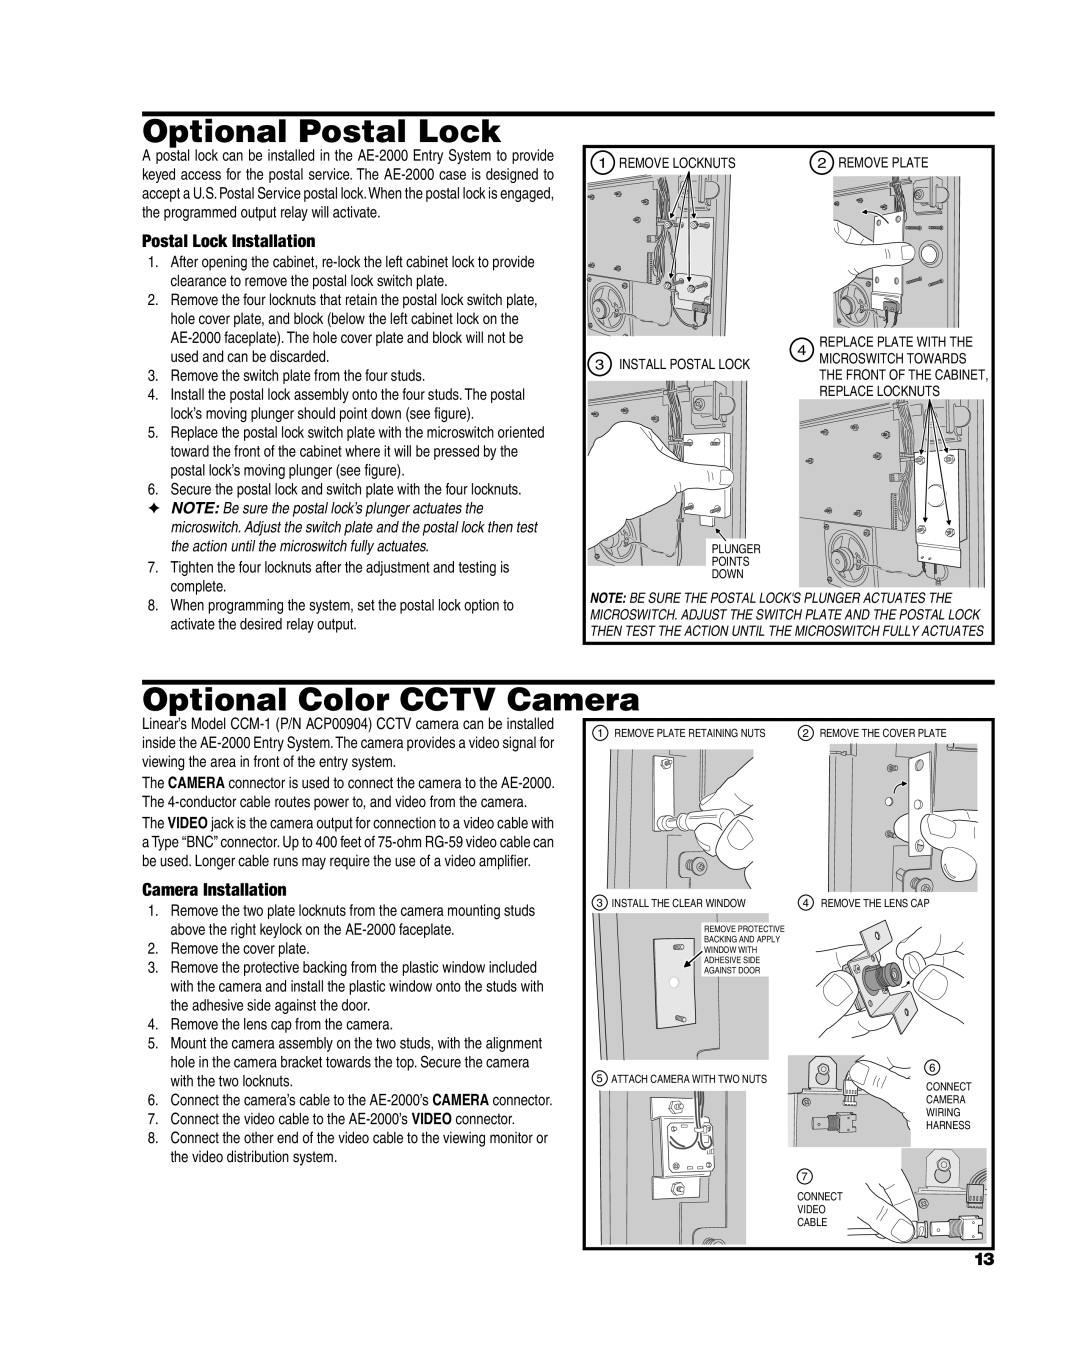 Linear AE-2000 Optional Postal Lock, Optional Color CCTV Camera, Postal Lock Installation, Camera Installation 